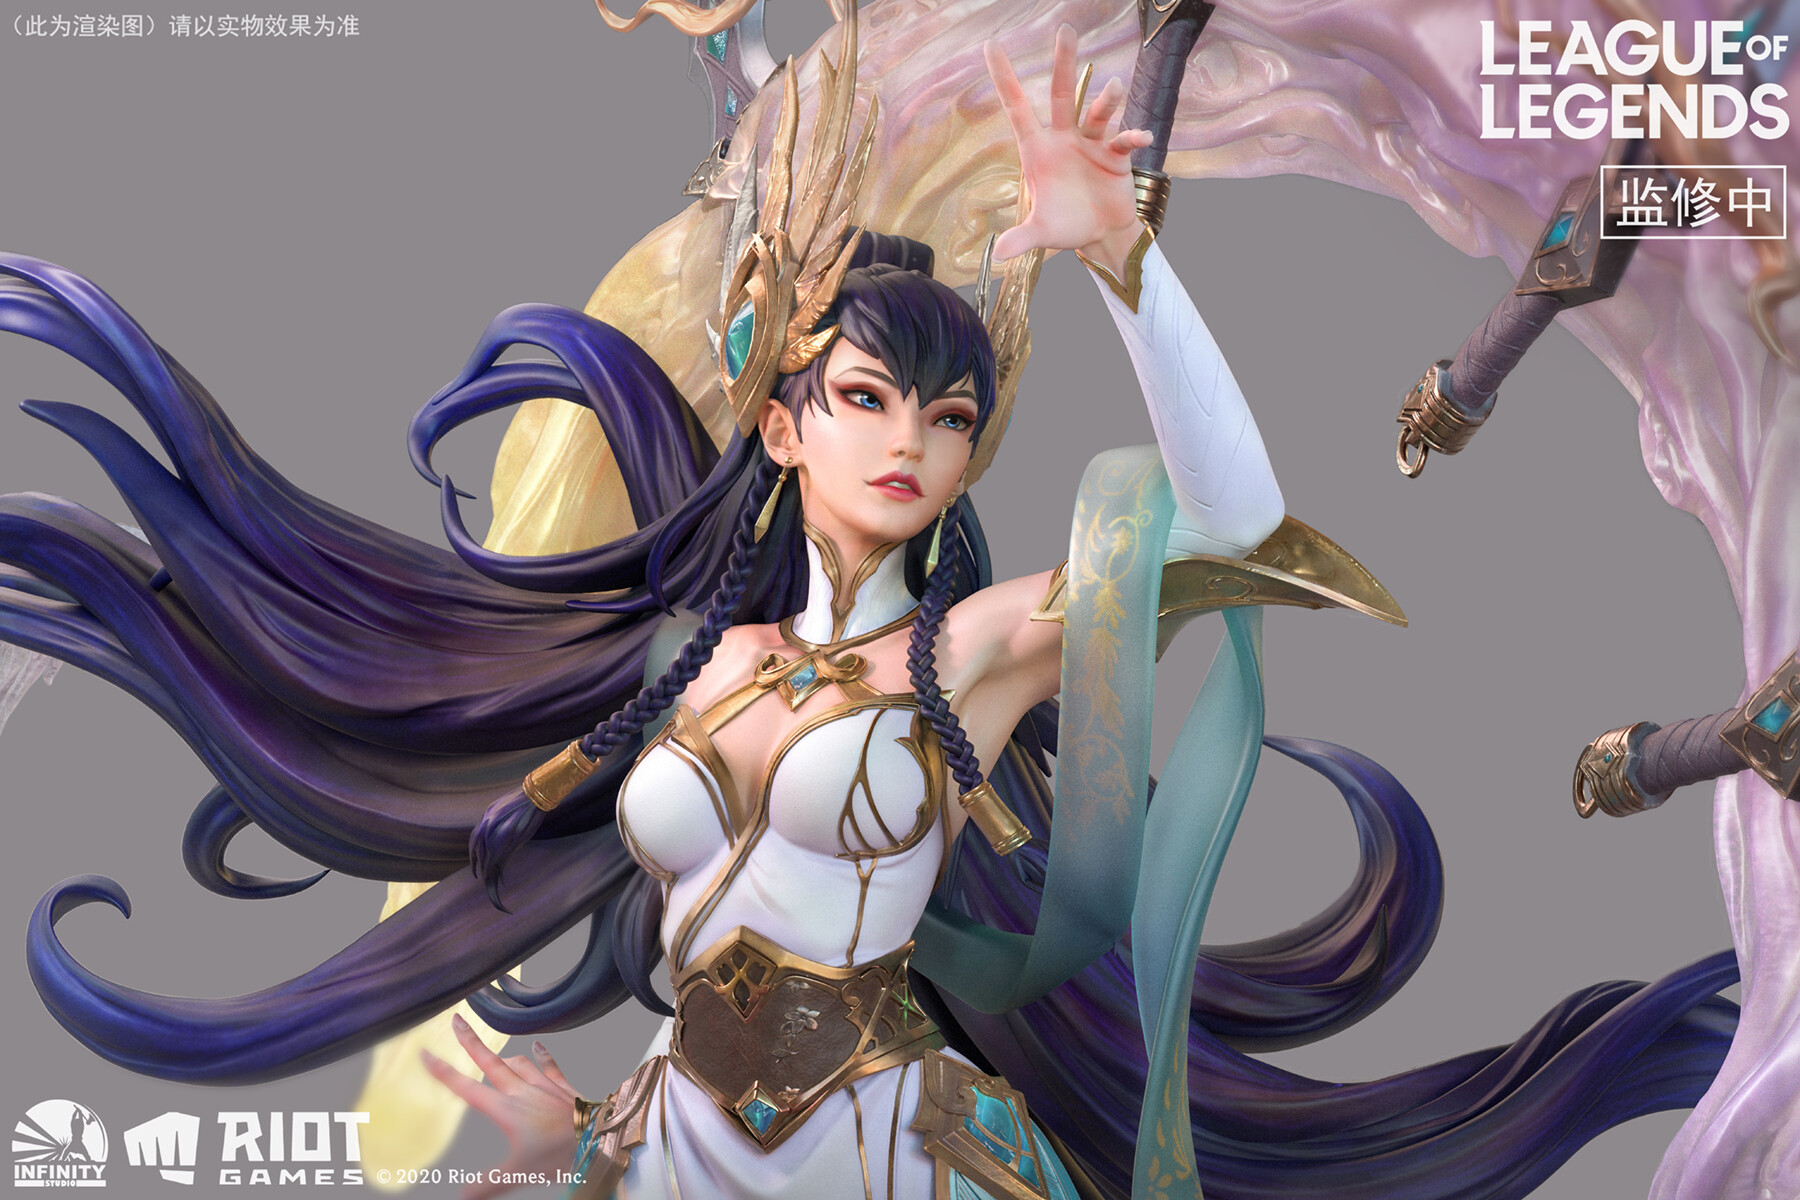 ArtStation Fantasy Art Fantasy Girl PC Gaming Video Game Art League Of Legends Purple Hair Long Hair 1800x1200